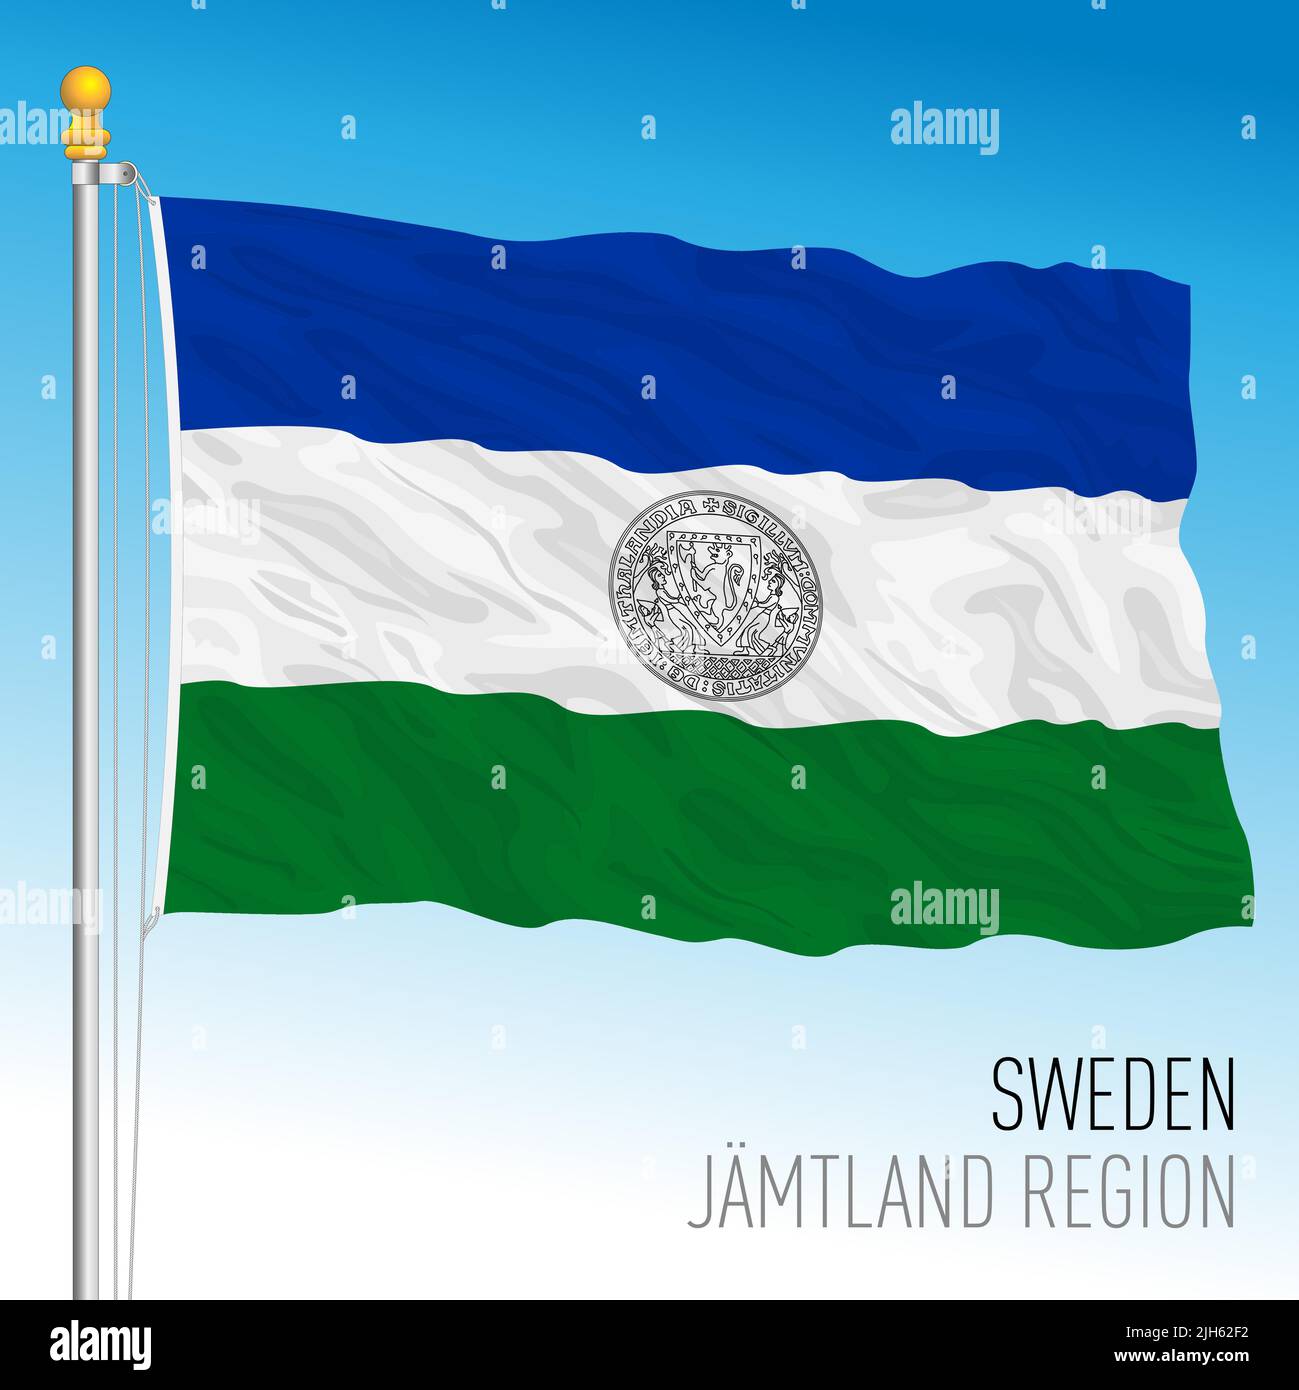 Jamtland regional flag, Kingdom of Sweden, vector illustration Stock Vector